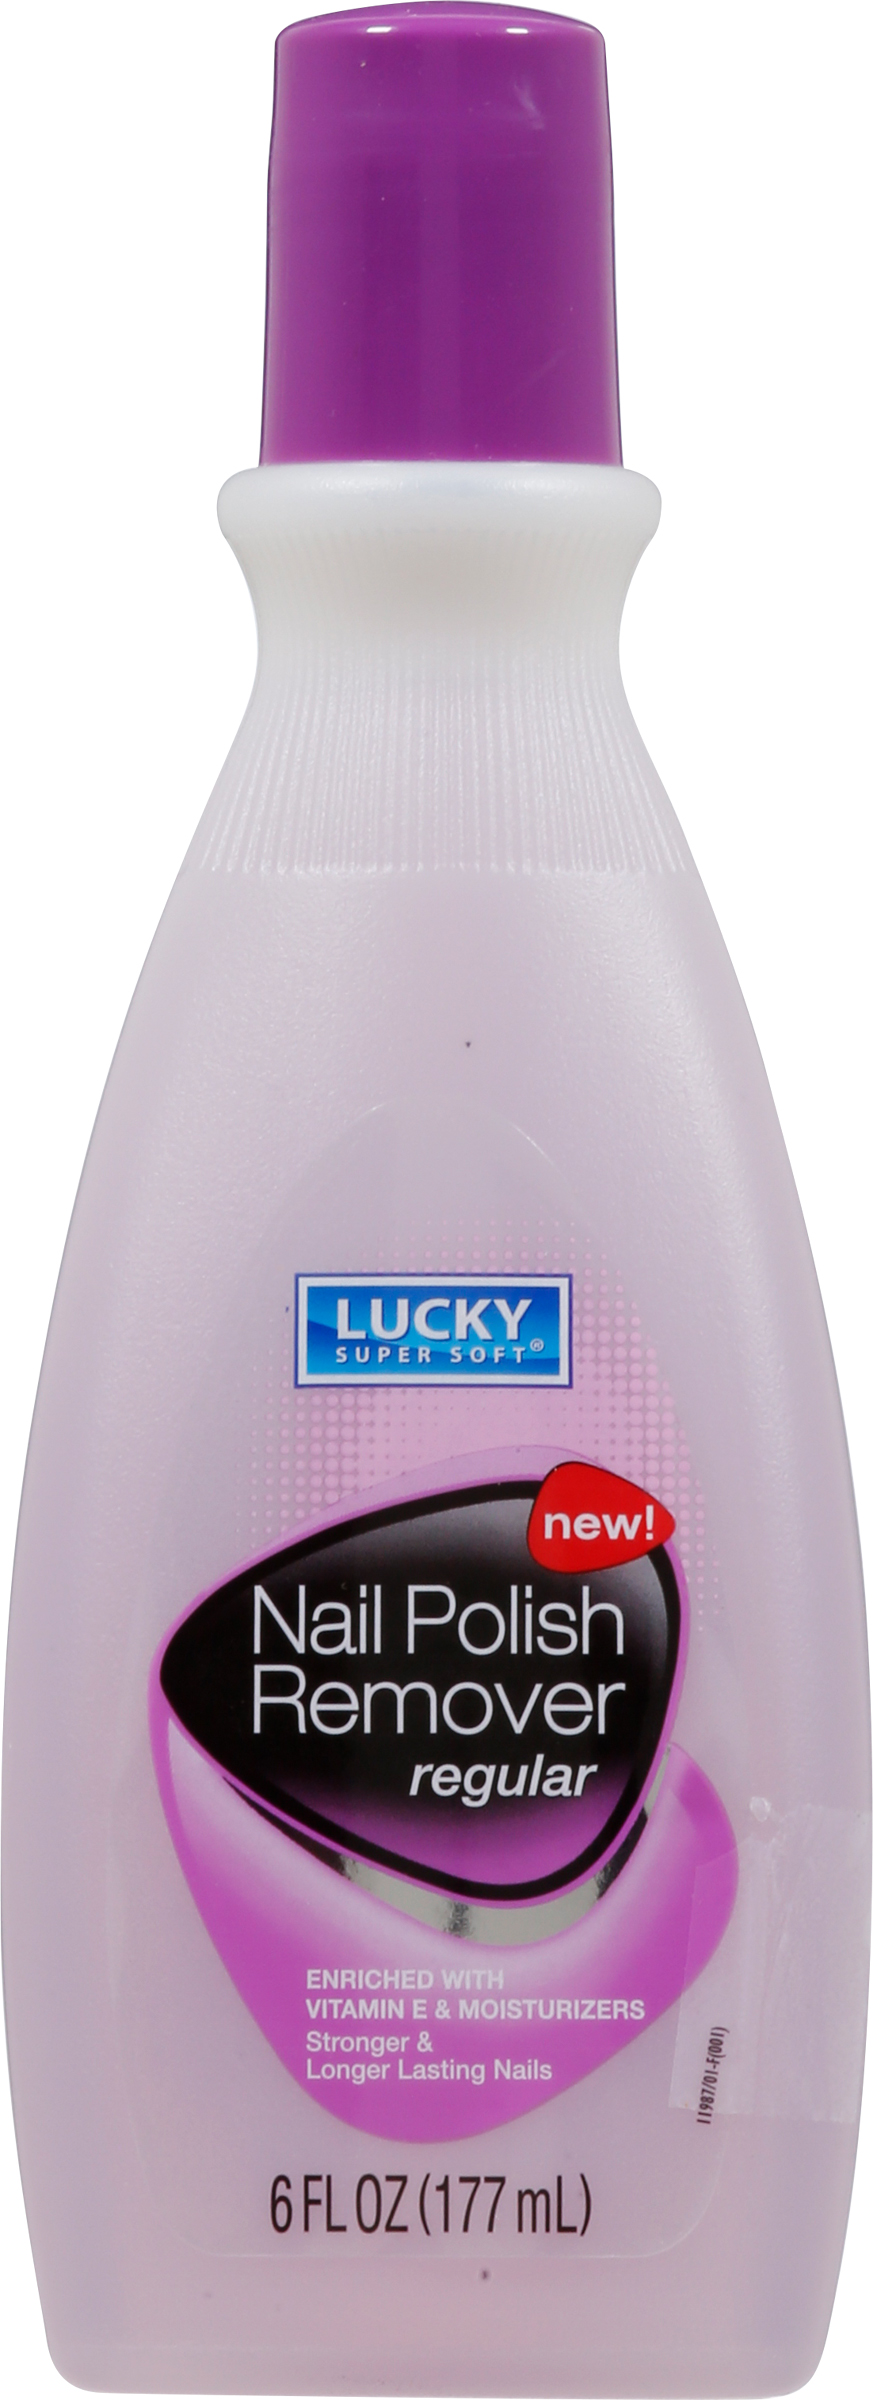 Nail Polish Remover Reg 6oz